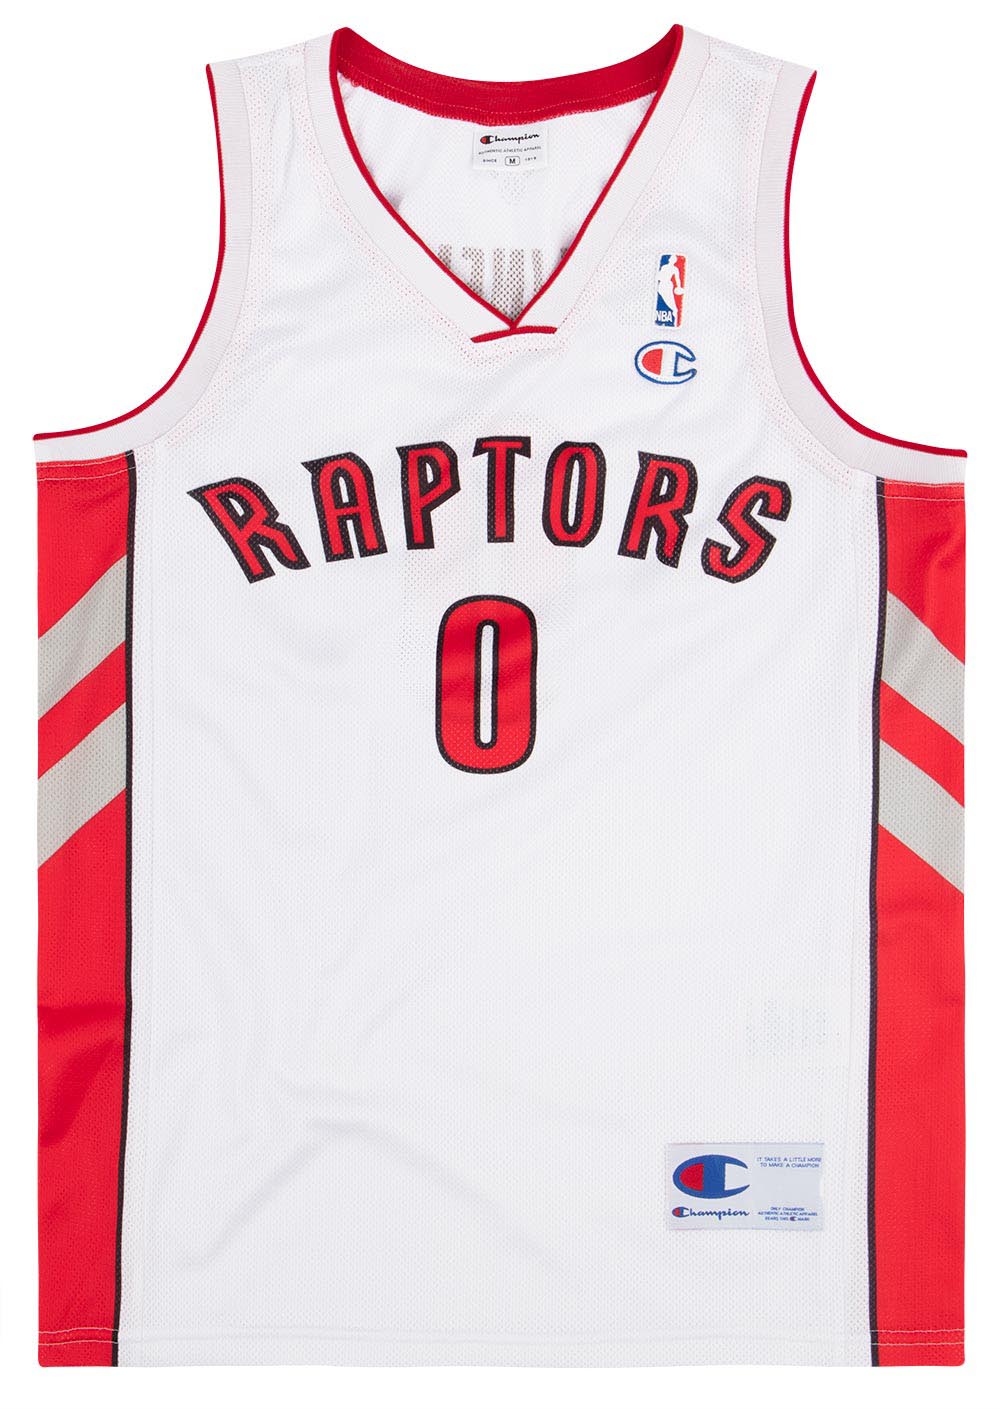 Raptors fourth jersey appears on NBA Europe store's website - Raptors HQ